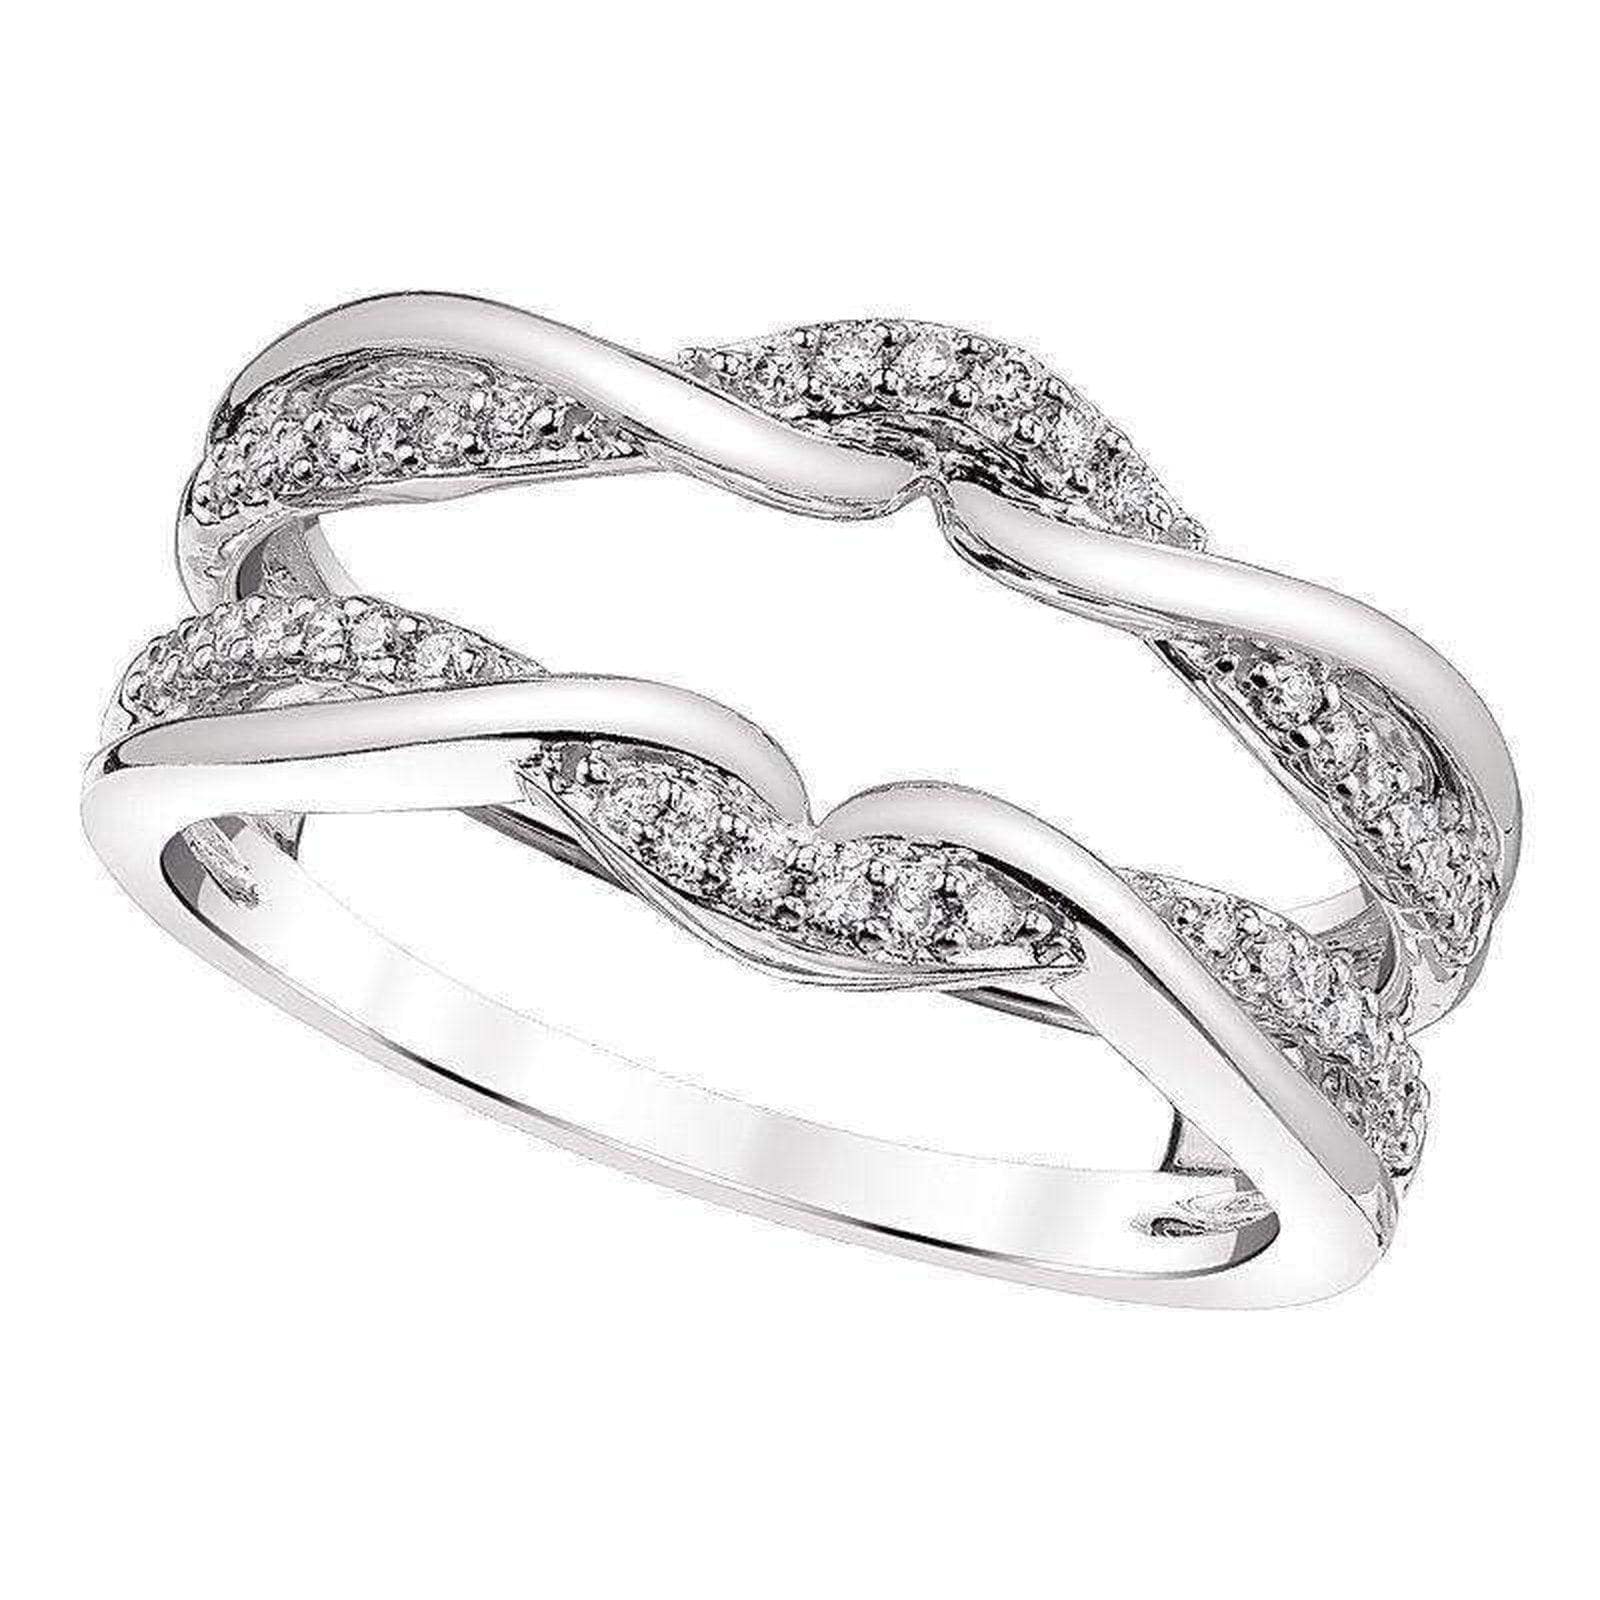 BW James Jewelers diamond wedding bands 14k Diamond Guard and Wrap